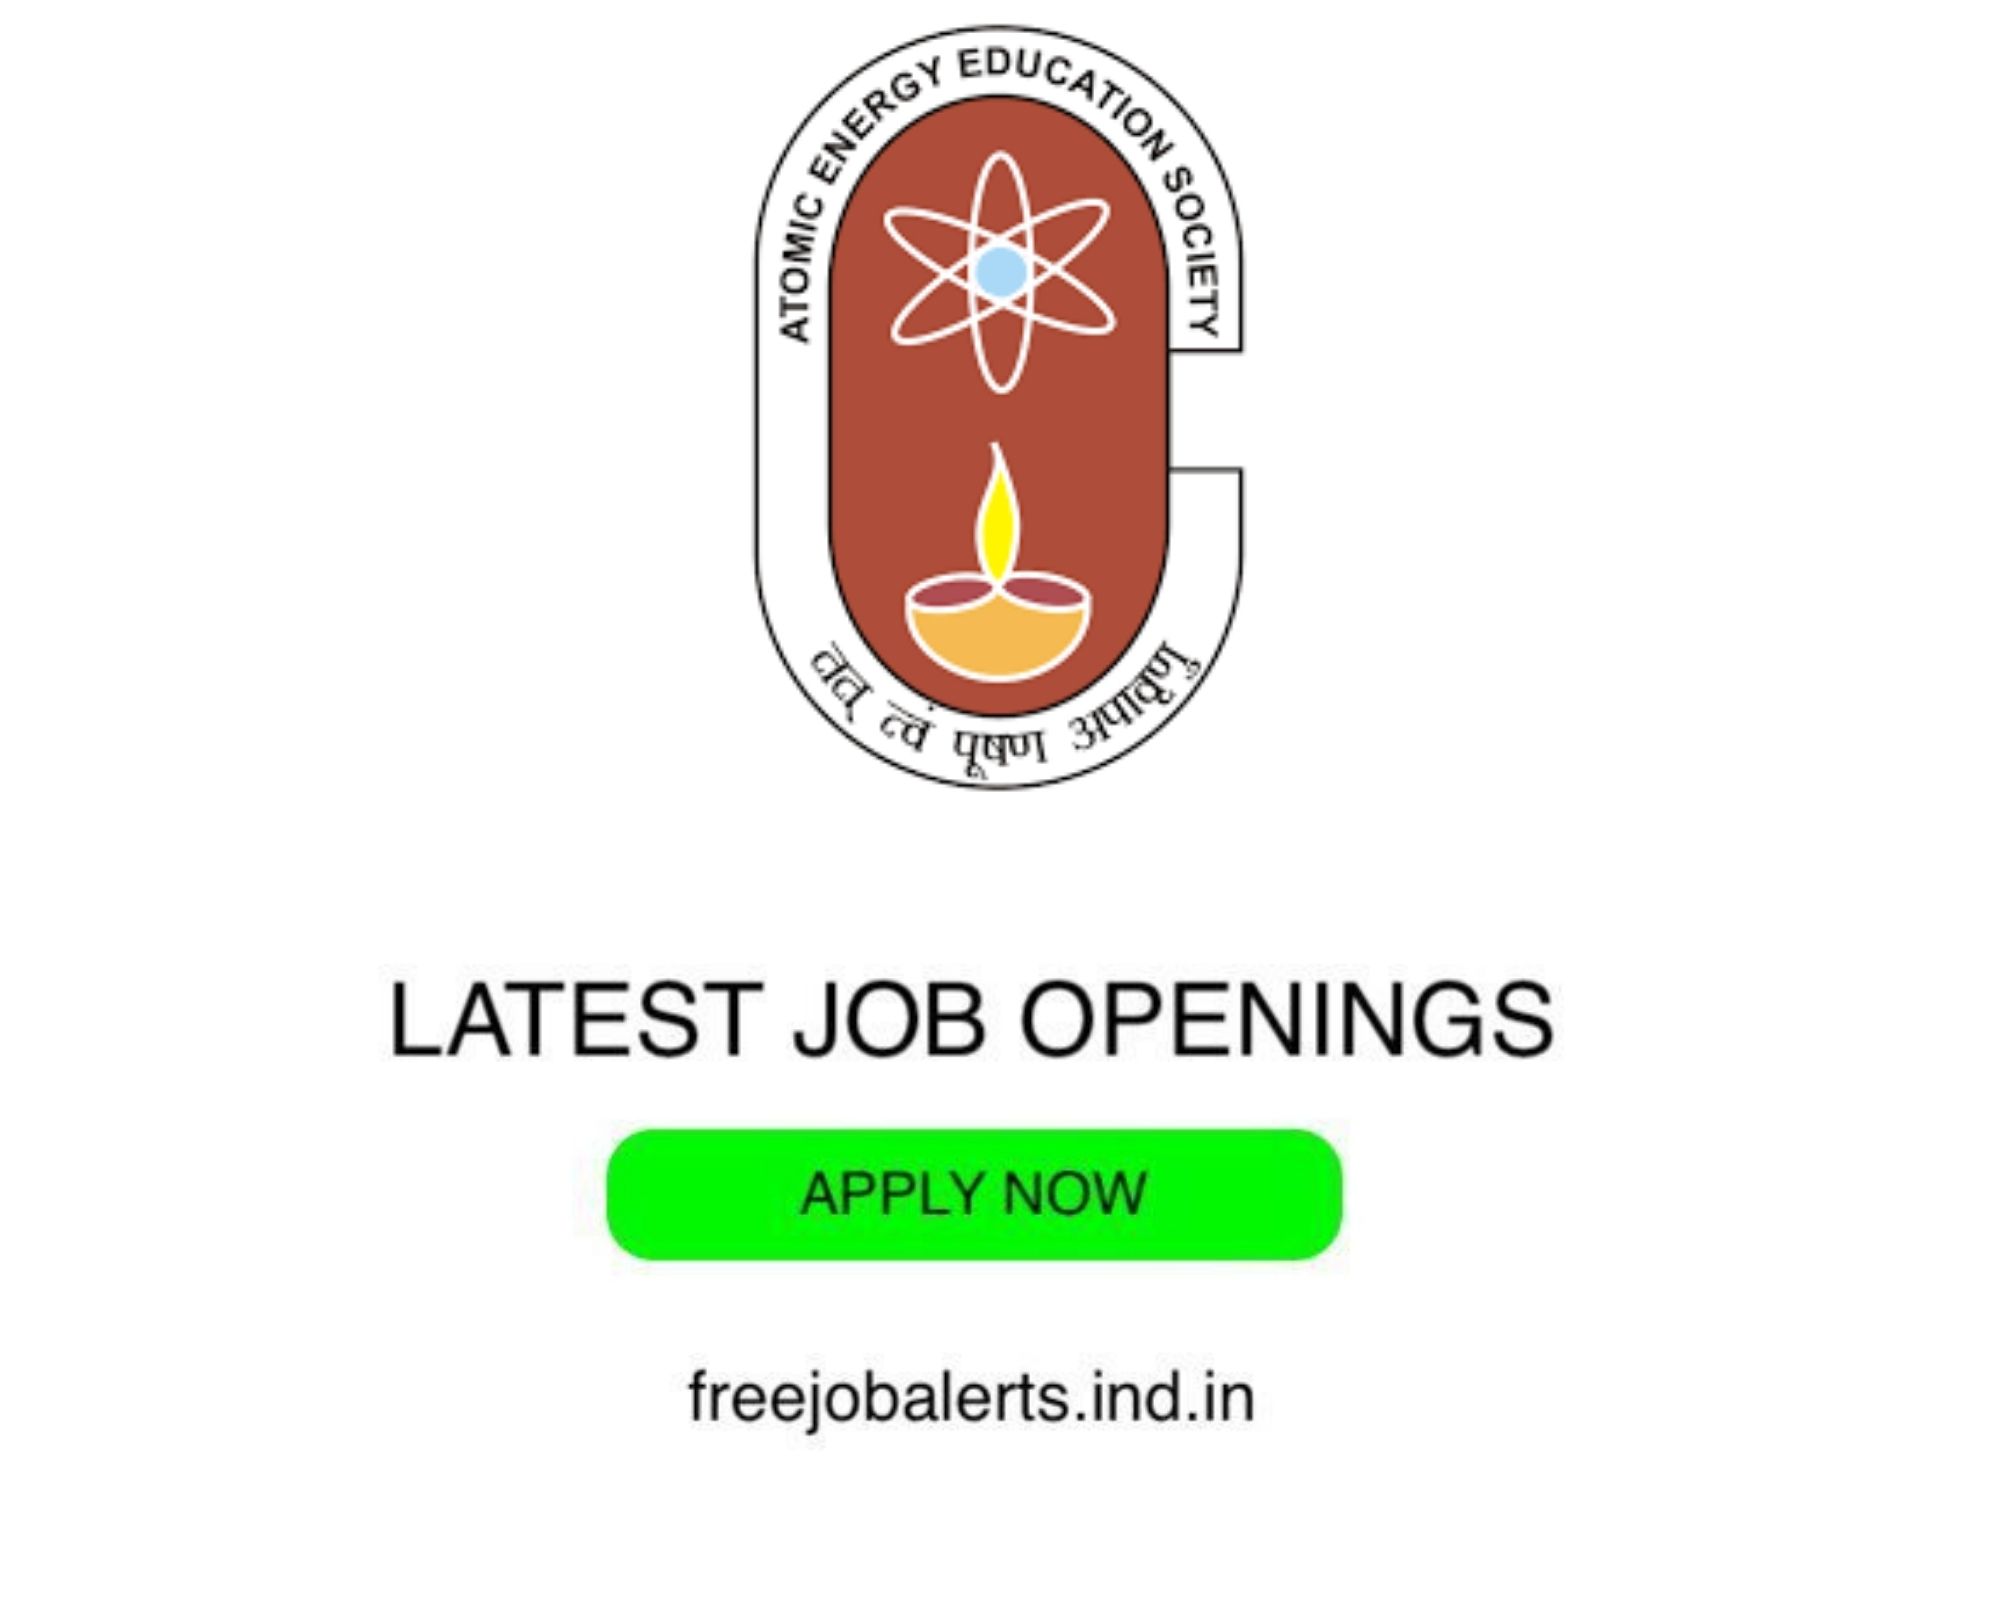 AEES Latest Govt job openings - Free job alerts, Indian Govt Jobs